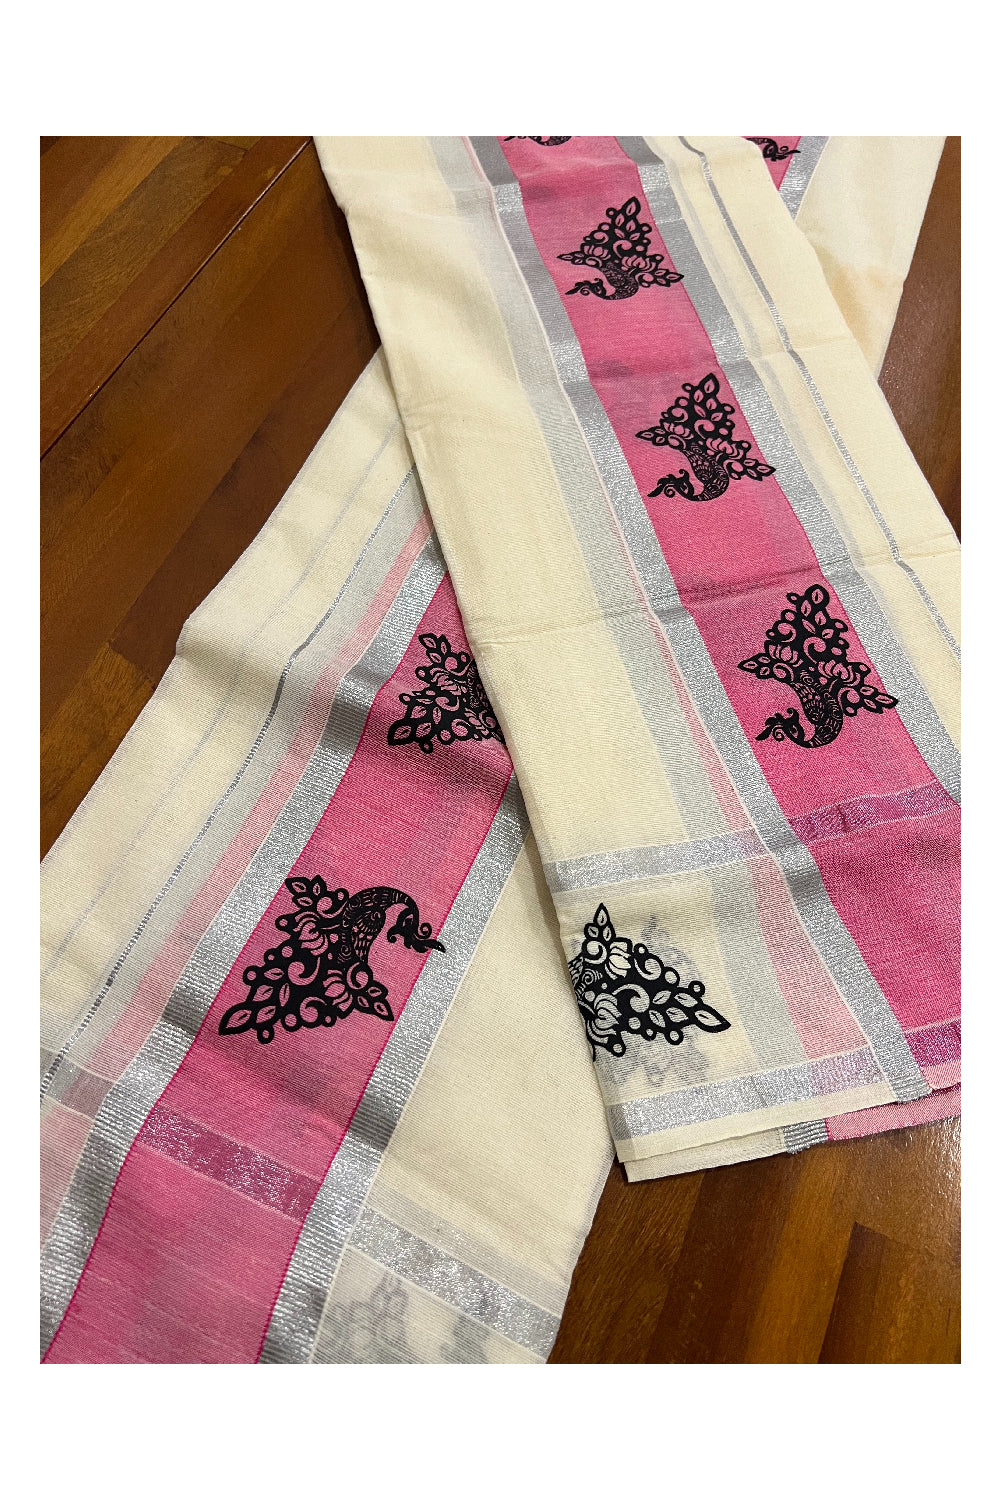 Kerala Cotton Set Mundu (Mundum Neriyathum) with Silver Kasavu and Black Block Prints on Pink Border